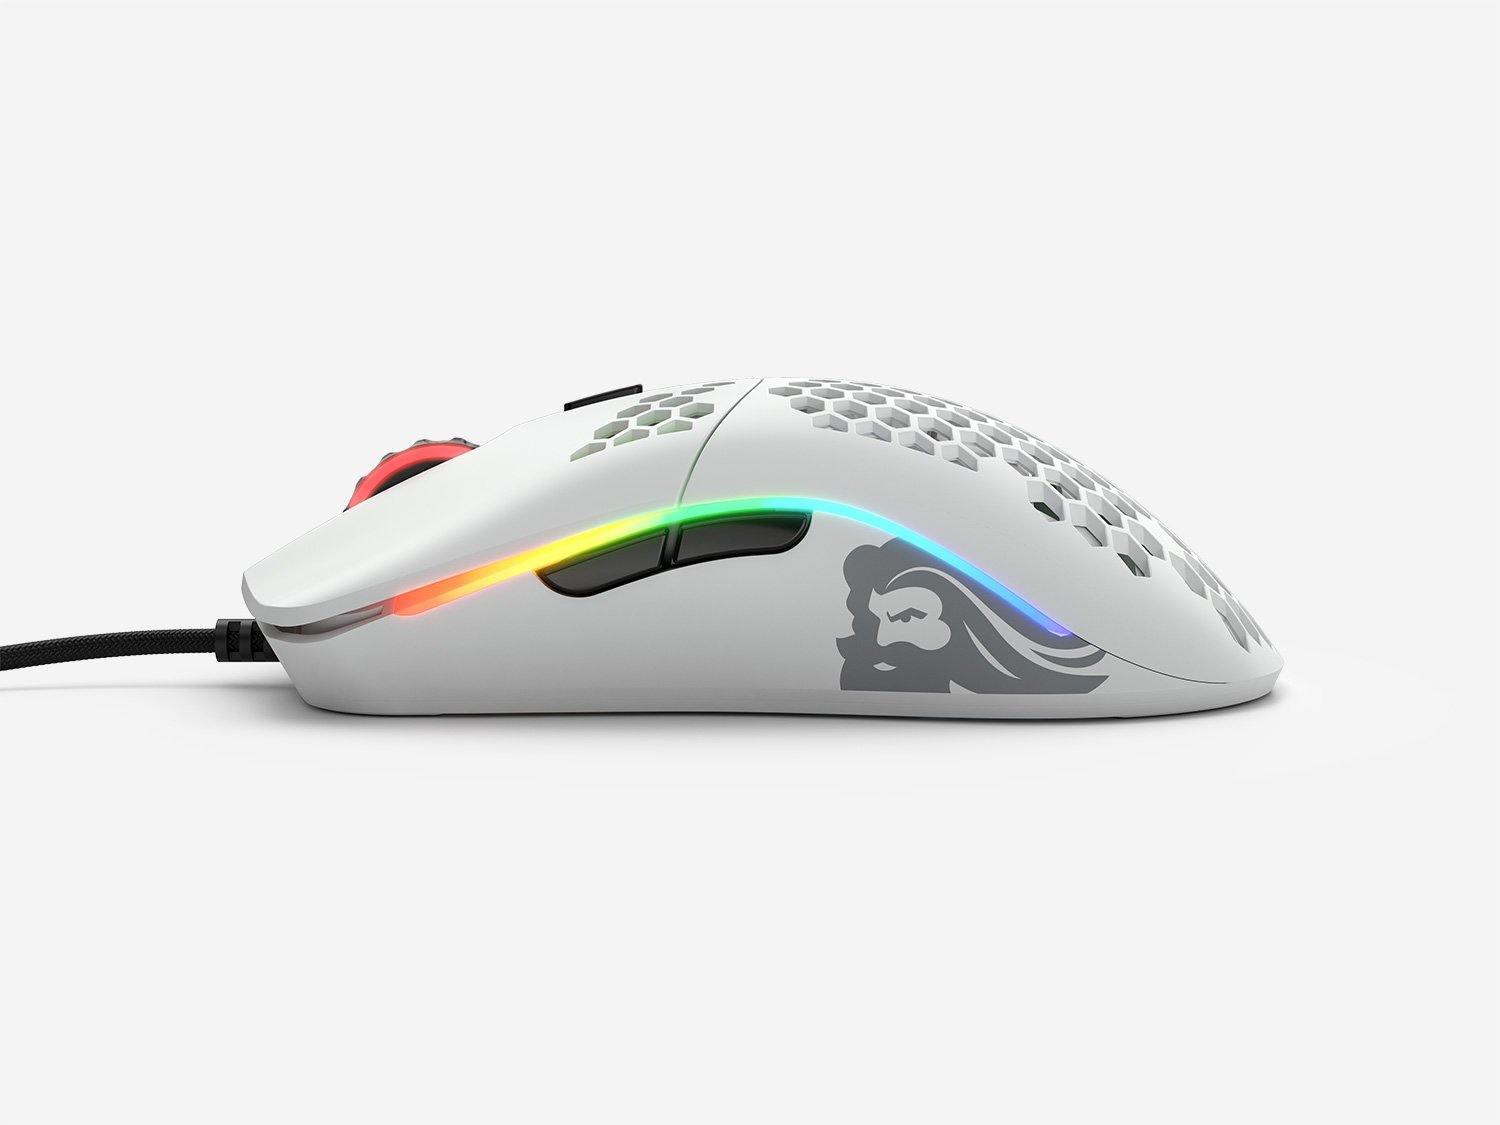 Glorious Gaming Mouse Model O Minus - Matte White